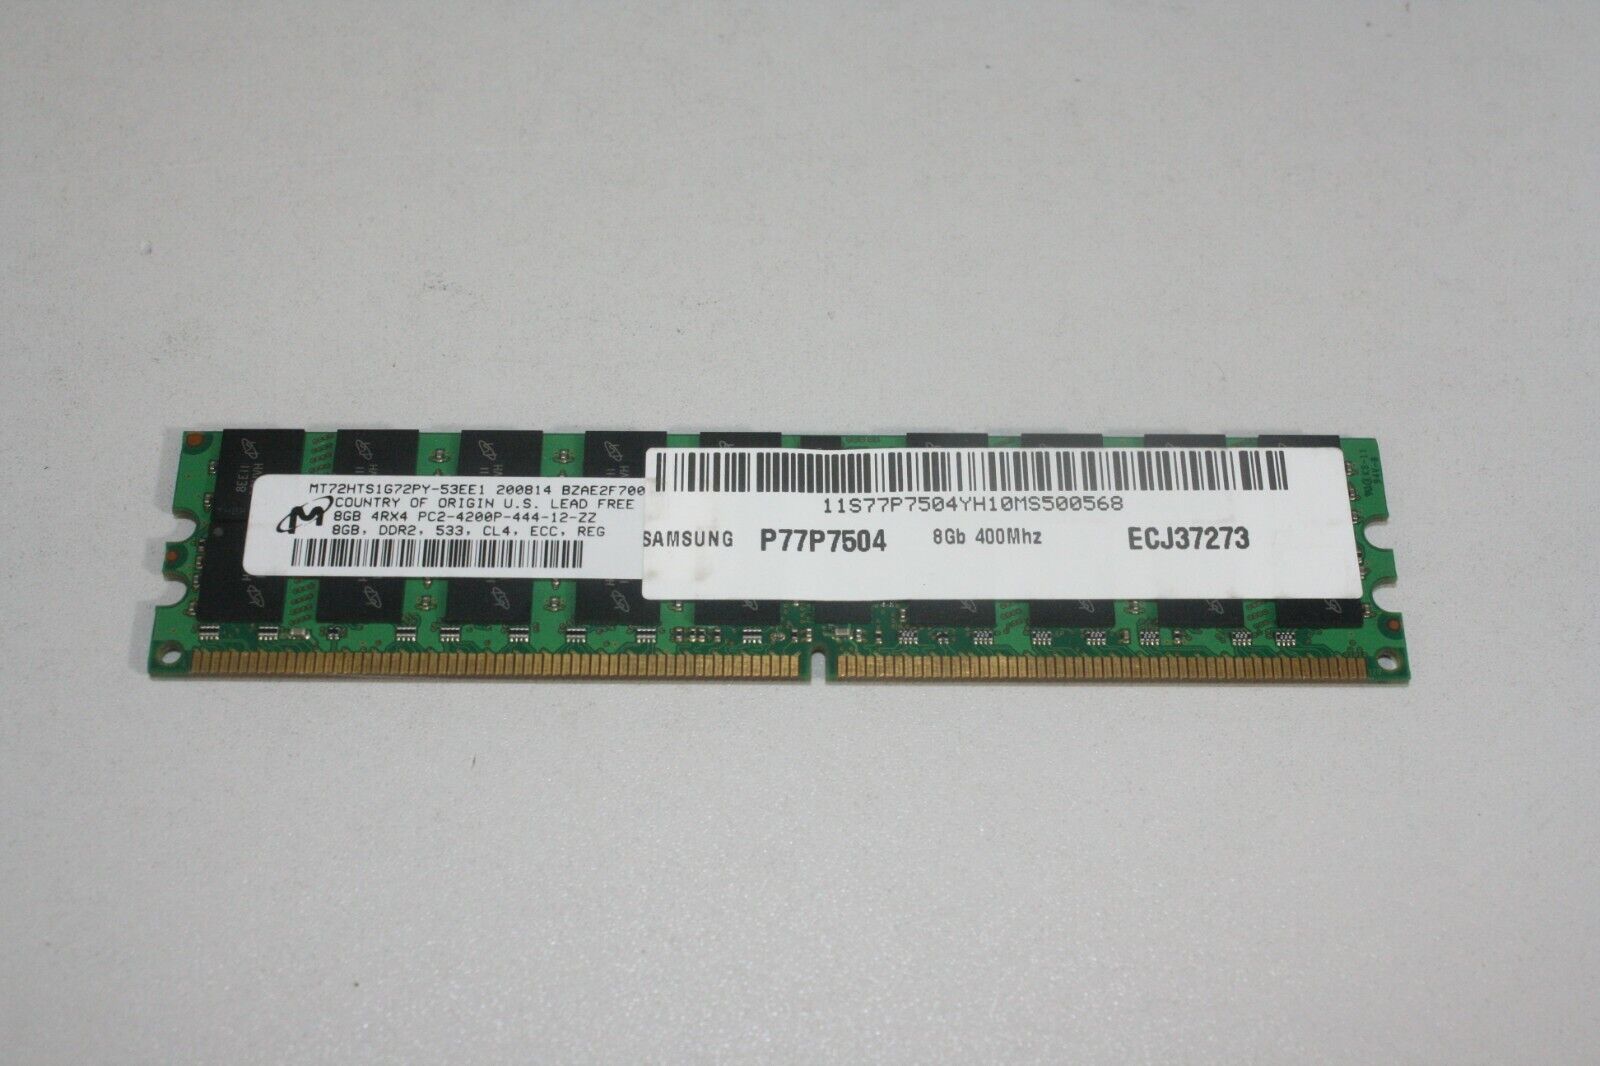 IBM System P pSeries eserver P6 Power6 8GB Memory 77P7504